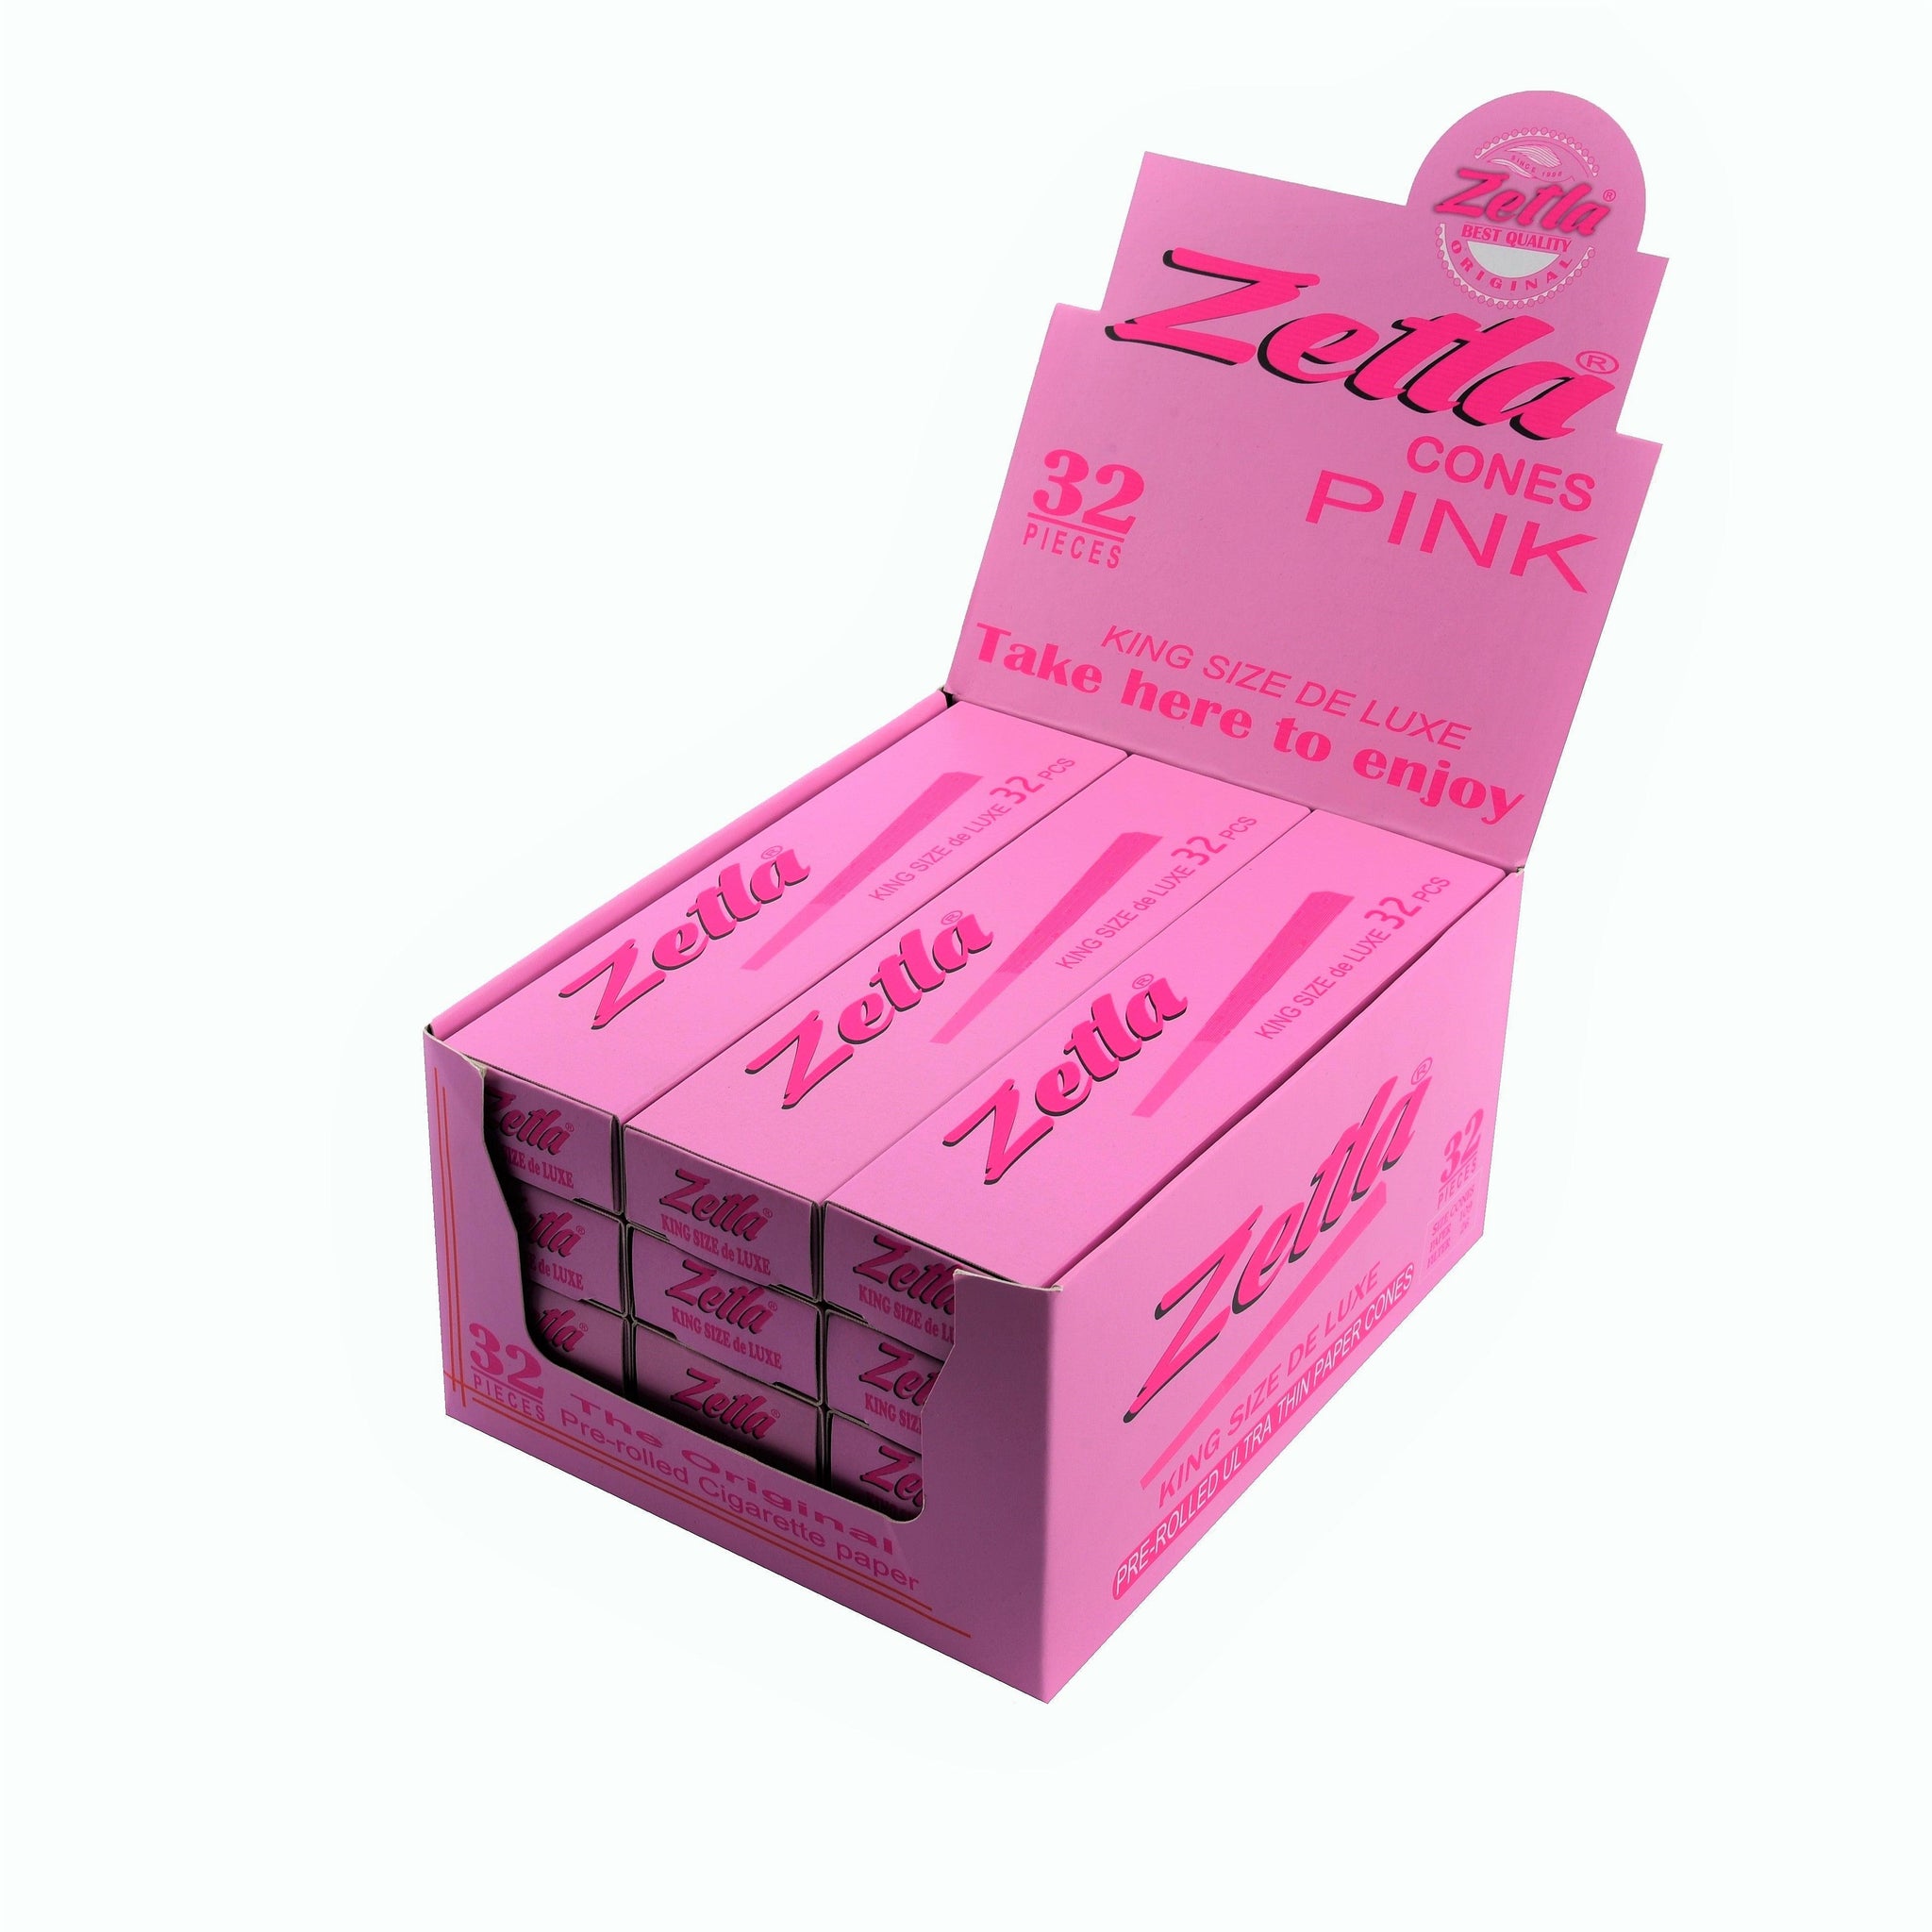 Pre-Rolled Cones Zetla King Size De Luxe Pink 32/12 - ABK Usa